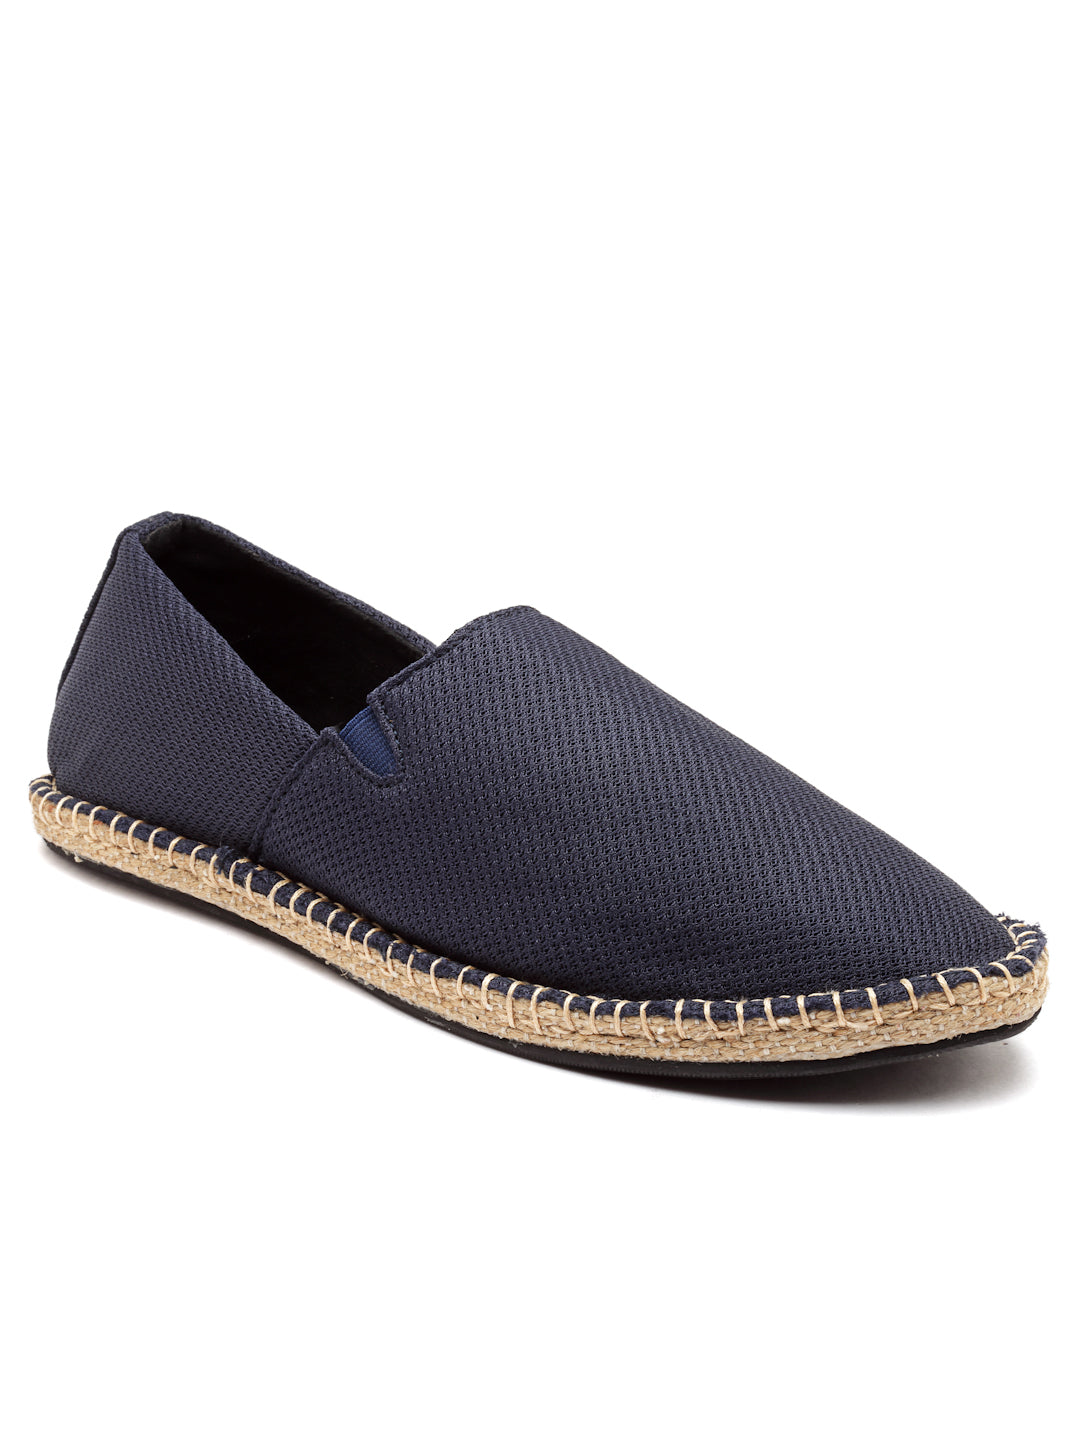 Navy Textile Comfortable Slip On Casual Shoes | Espadrilles – Refoam